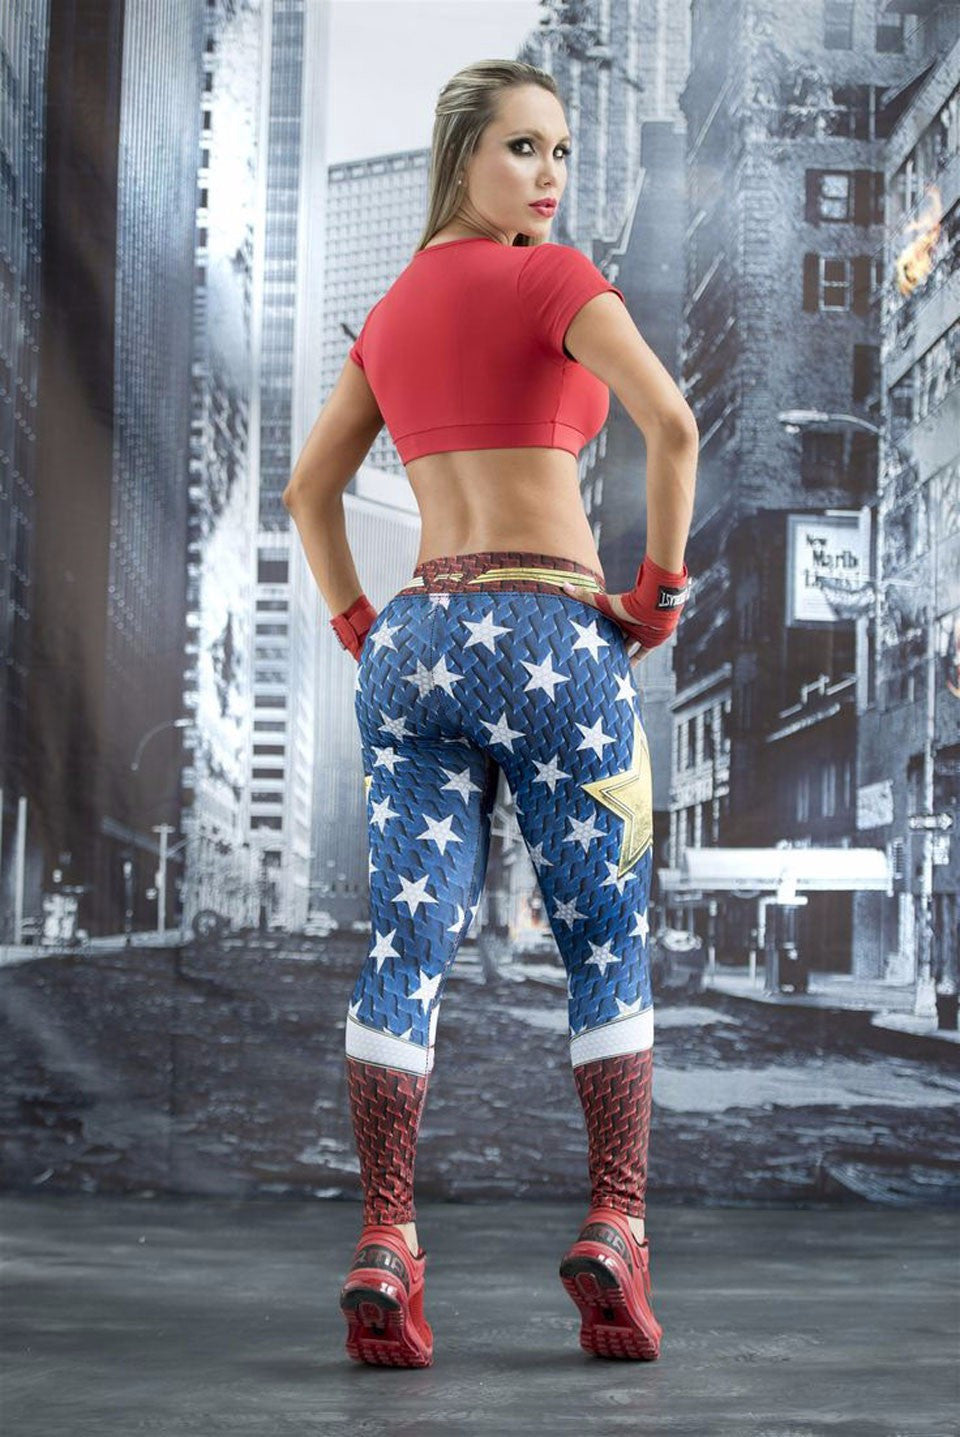 Wonder Woman Compression Leggings for Women